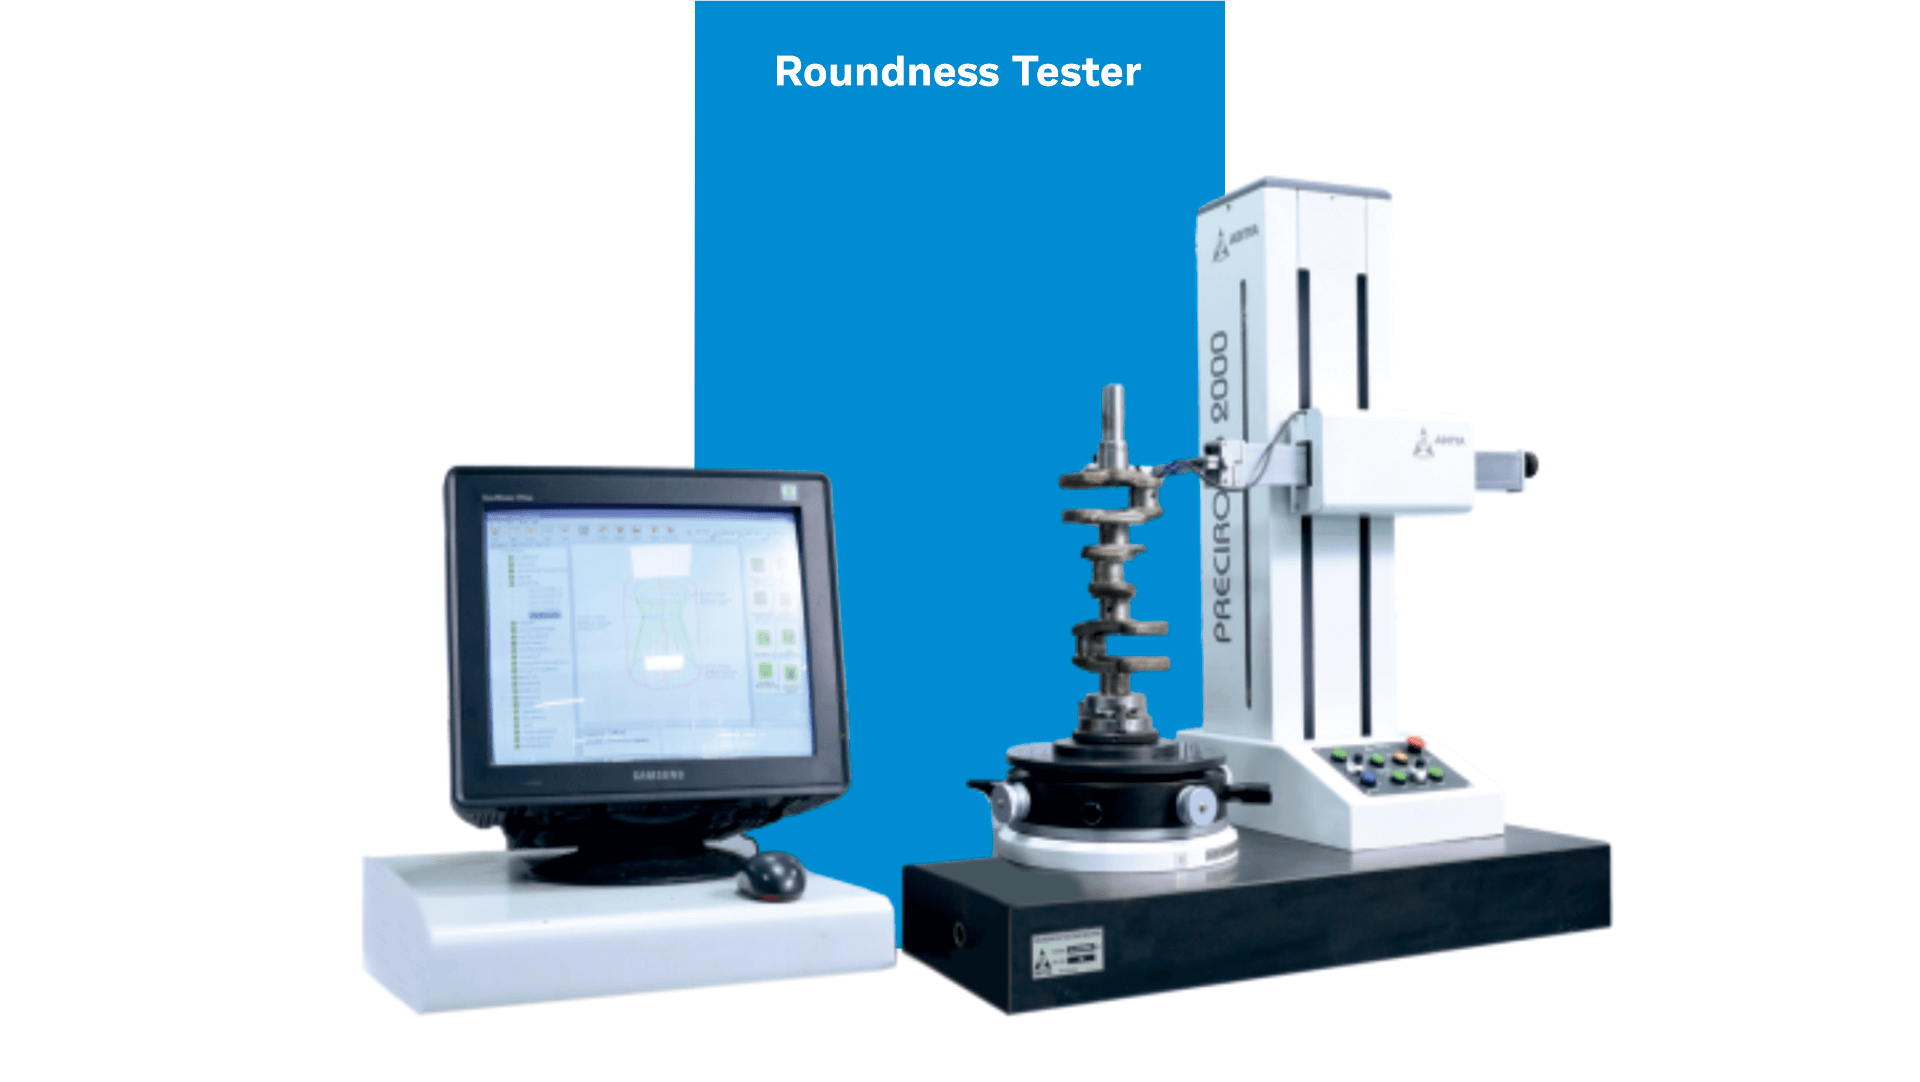 Roundness Tester